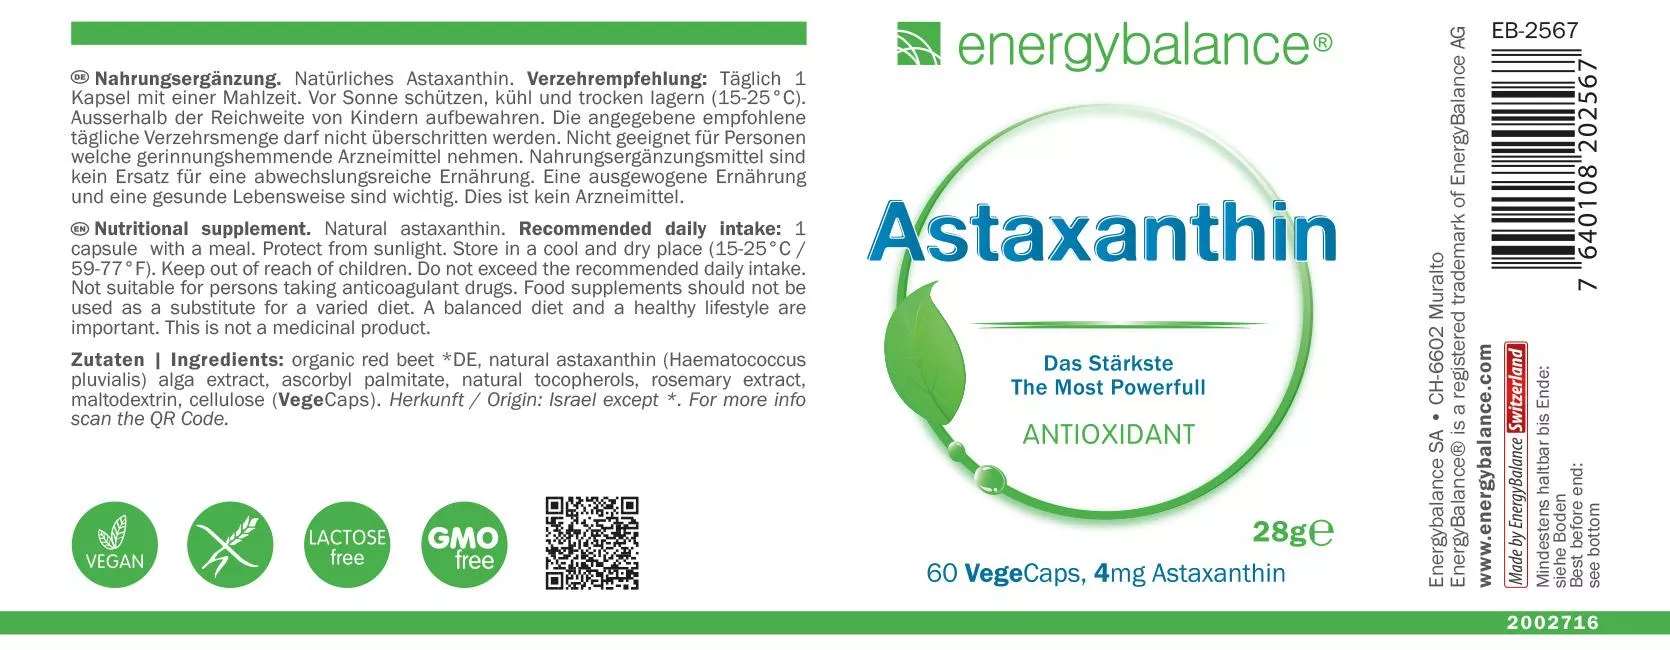 Astaxanthin Etikett von Energybalance